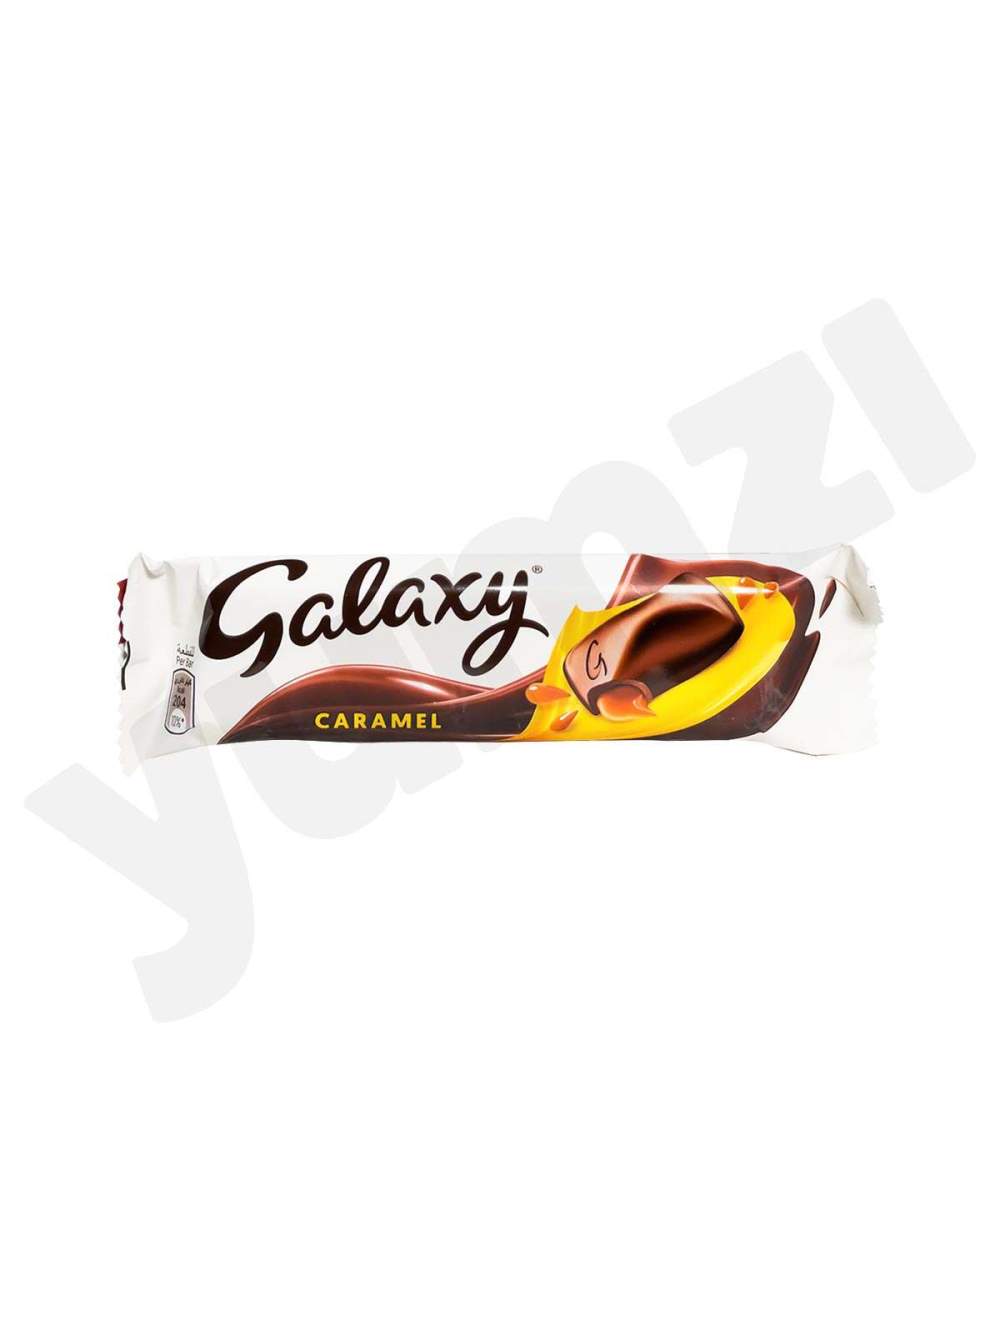 https://www.yumzi.com/media/catalog/product/cache/8e8765cbc0fb5bc2a16525a086509d6c/g/a/galaxy-caramel-chocolate-bar-40-gm.jpg